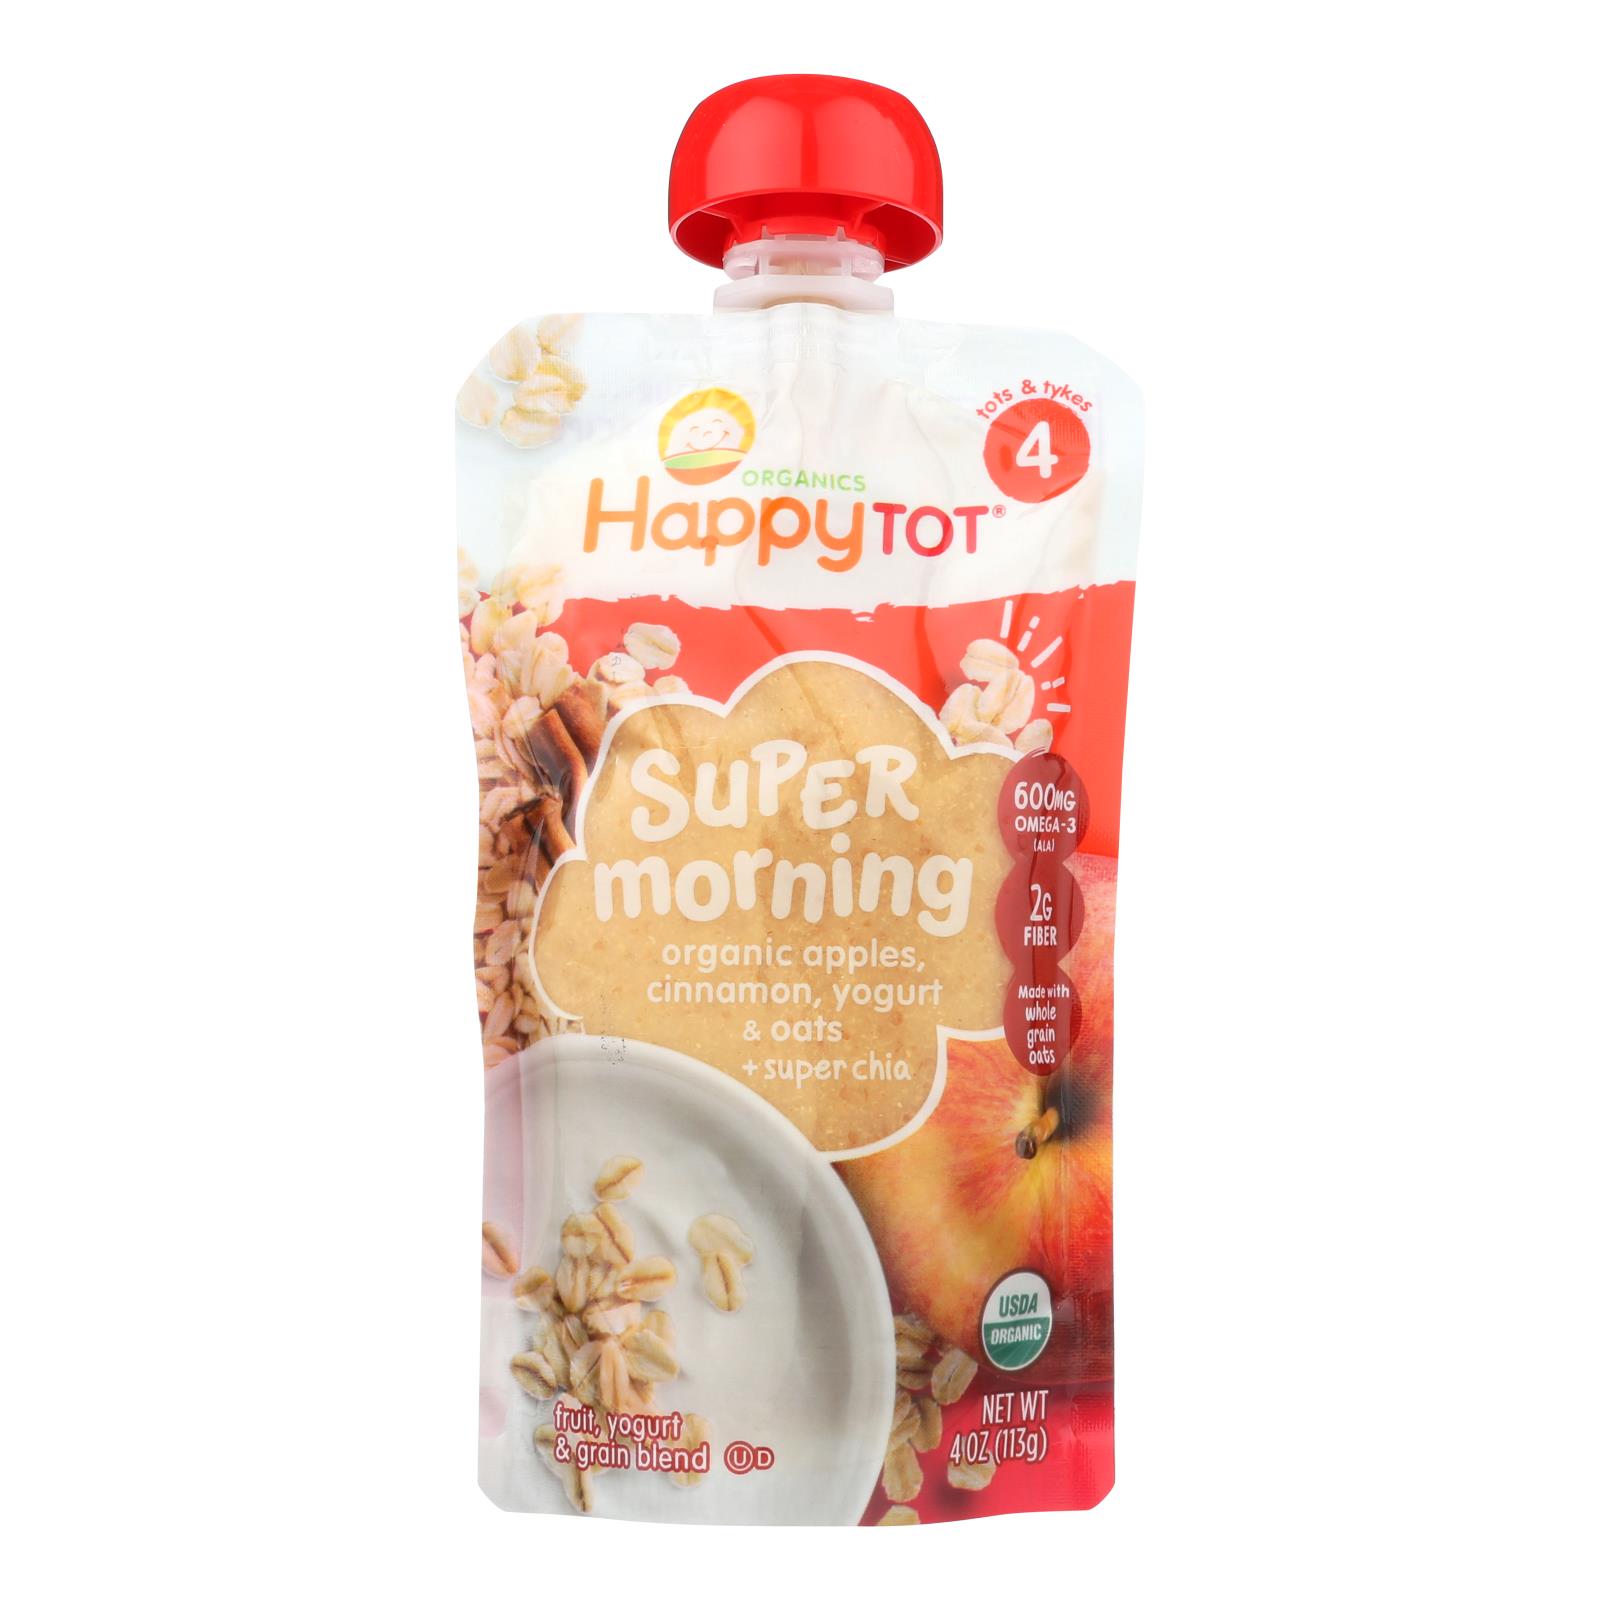 Happy Tot Super Morning Organic Apples, Cinnamon, Yogurt And Oats + Super Chia - 16개 묶음상품 - 4 OZ